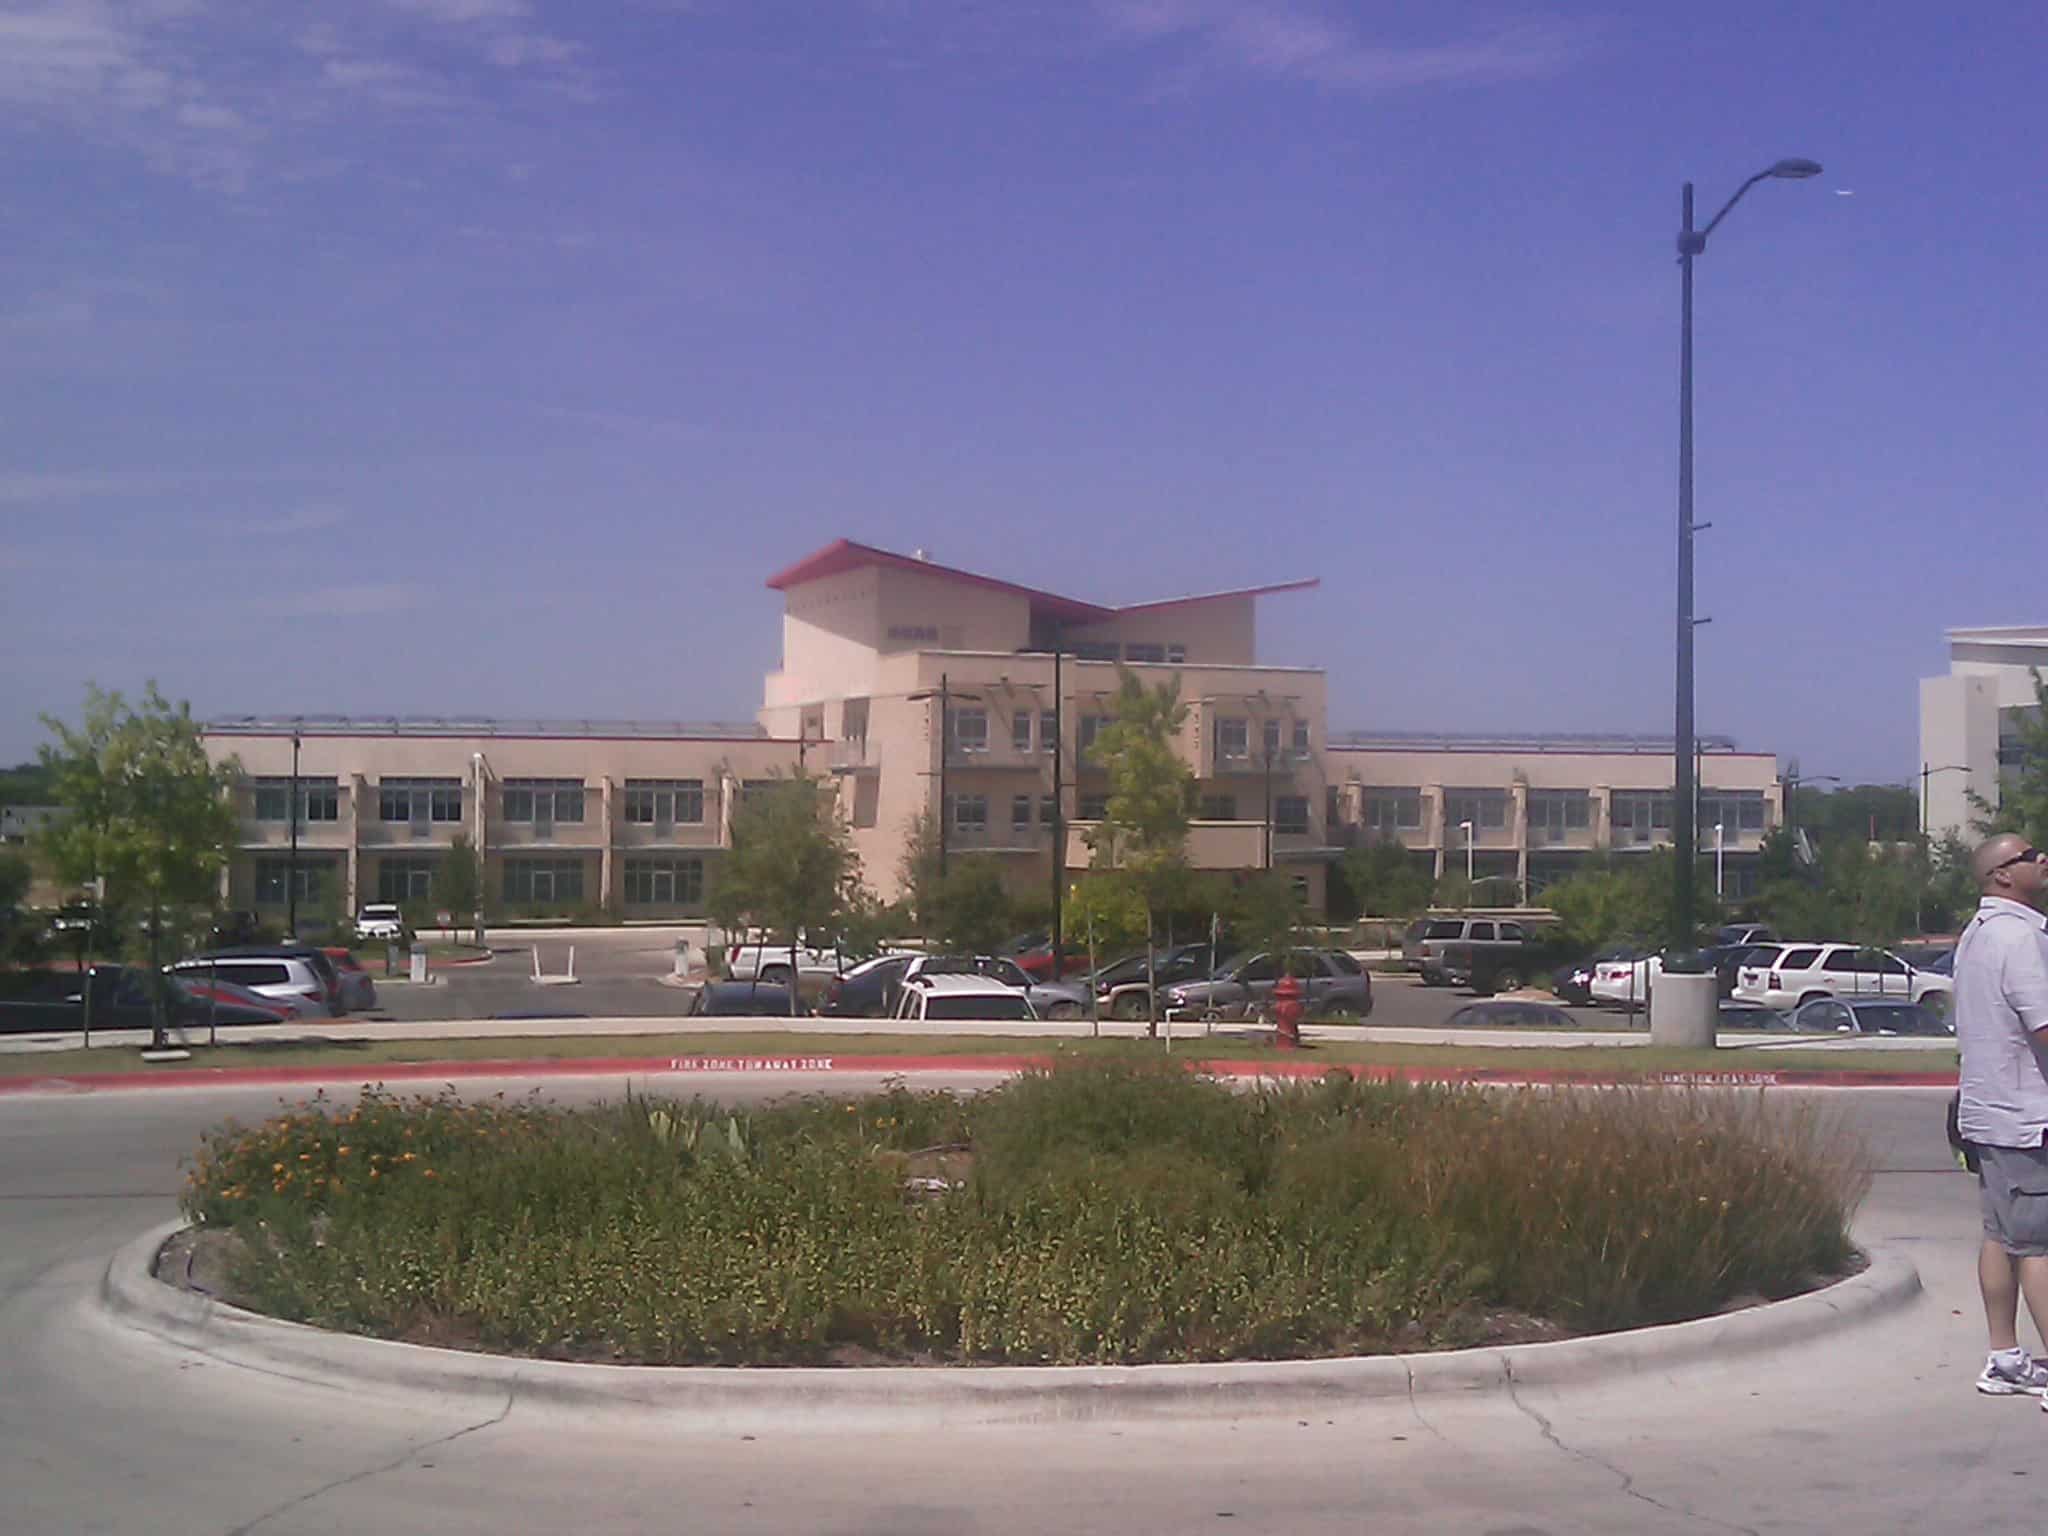 Dell Children's Medical Center of Central Texas - BACnet